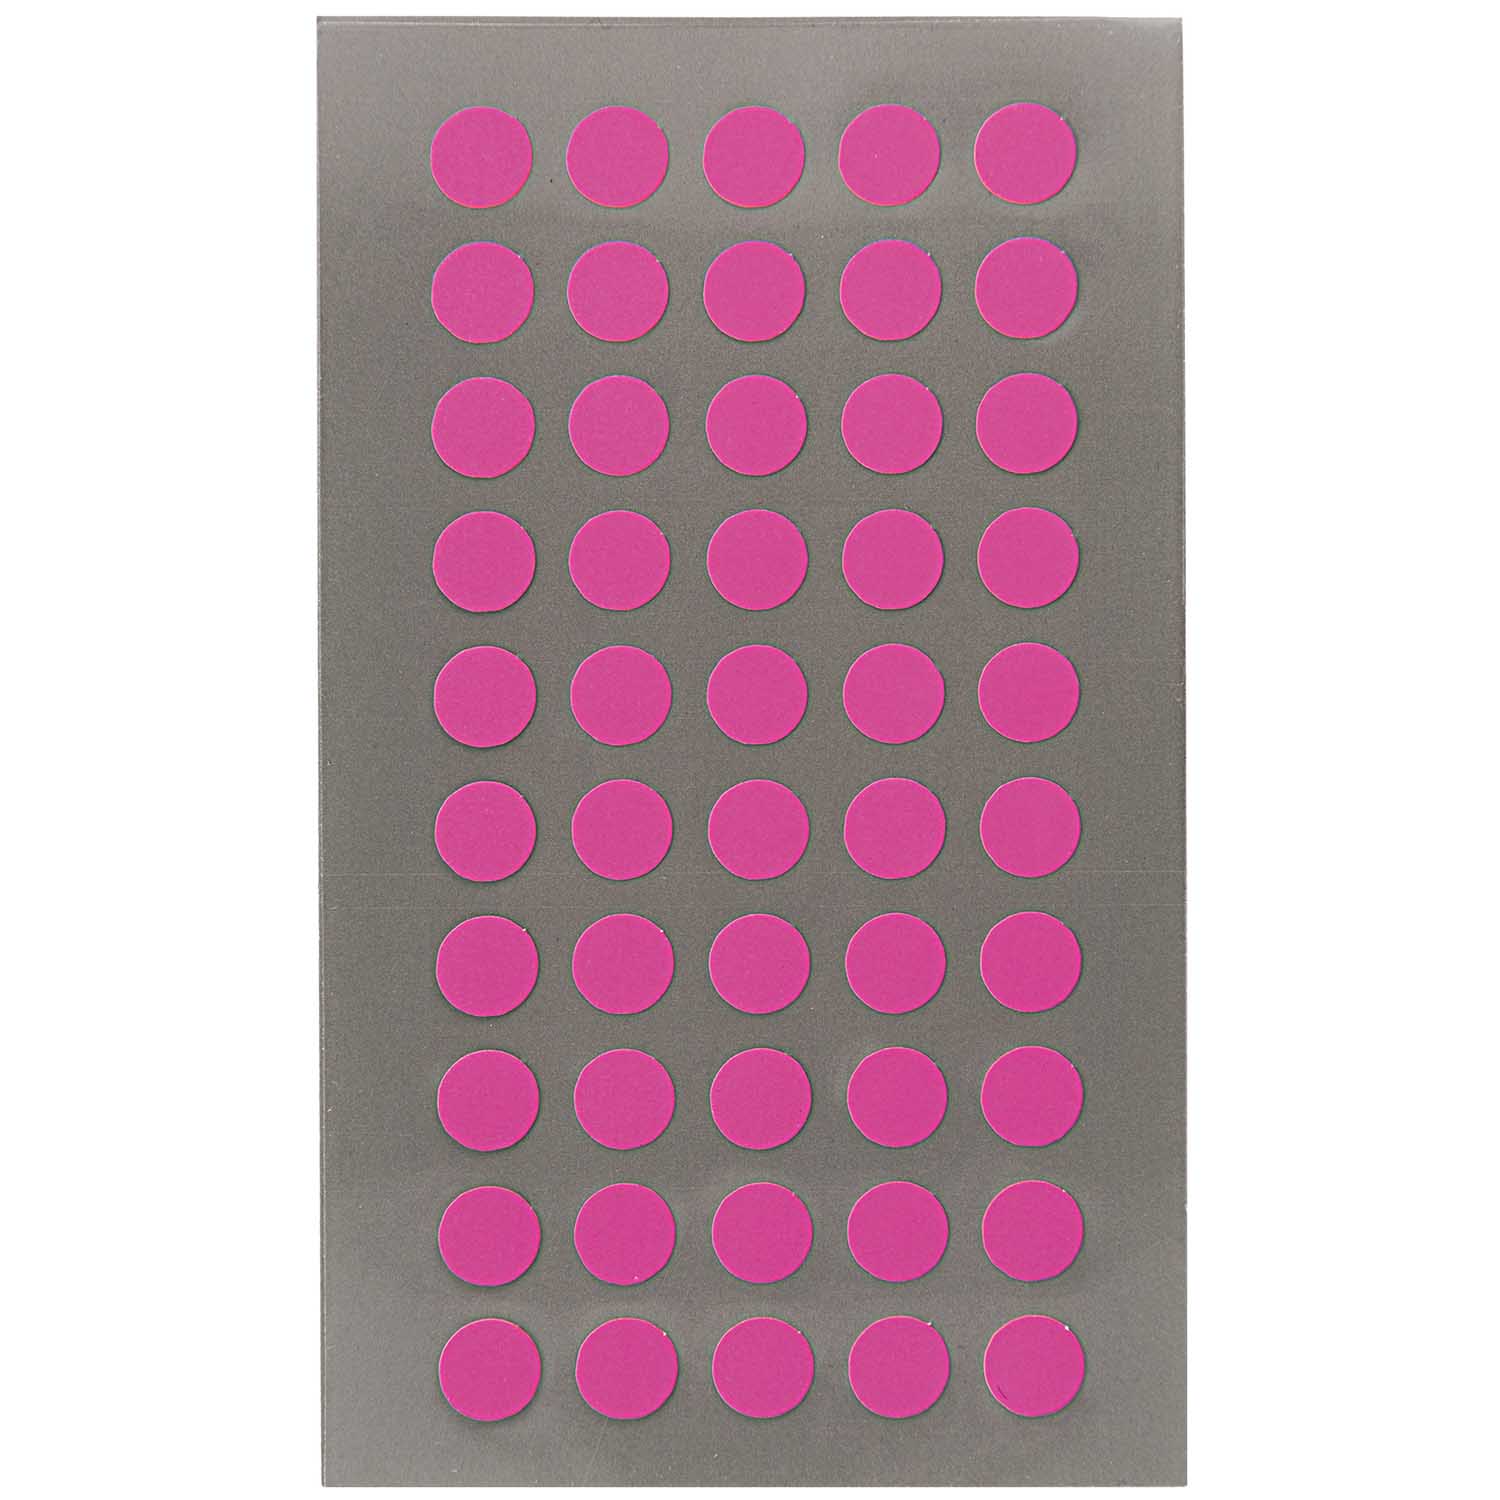 NEU Office Sticker, neon-pinke Punkte, 8 mm, 4 Blatt